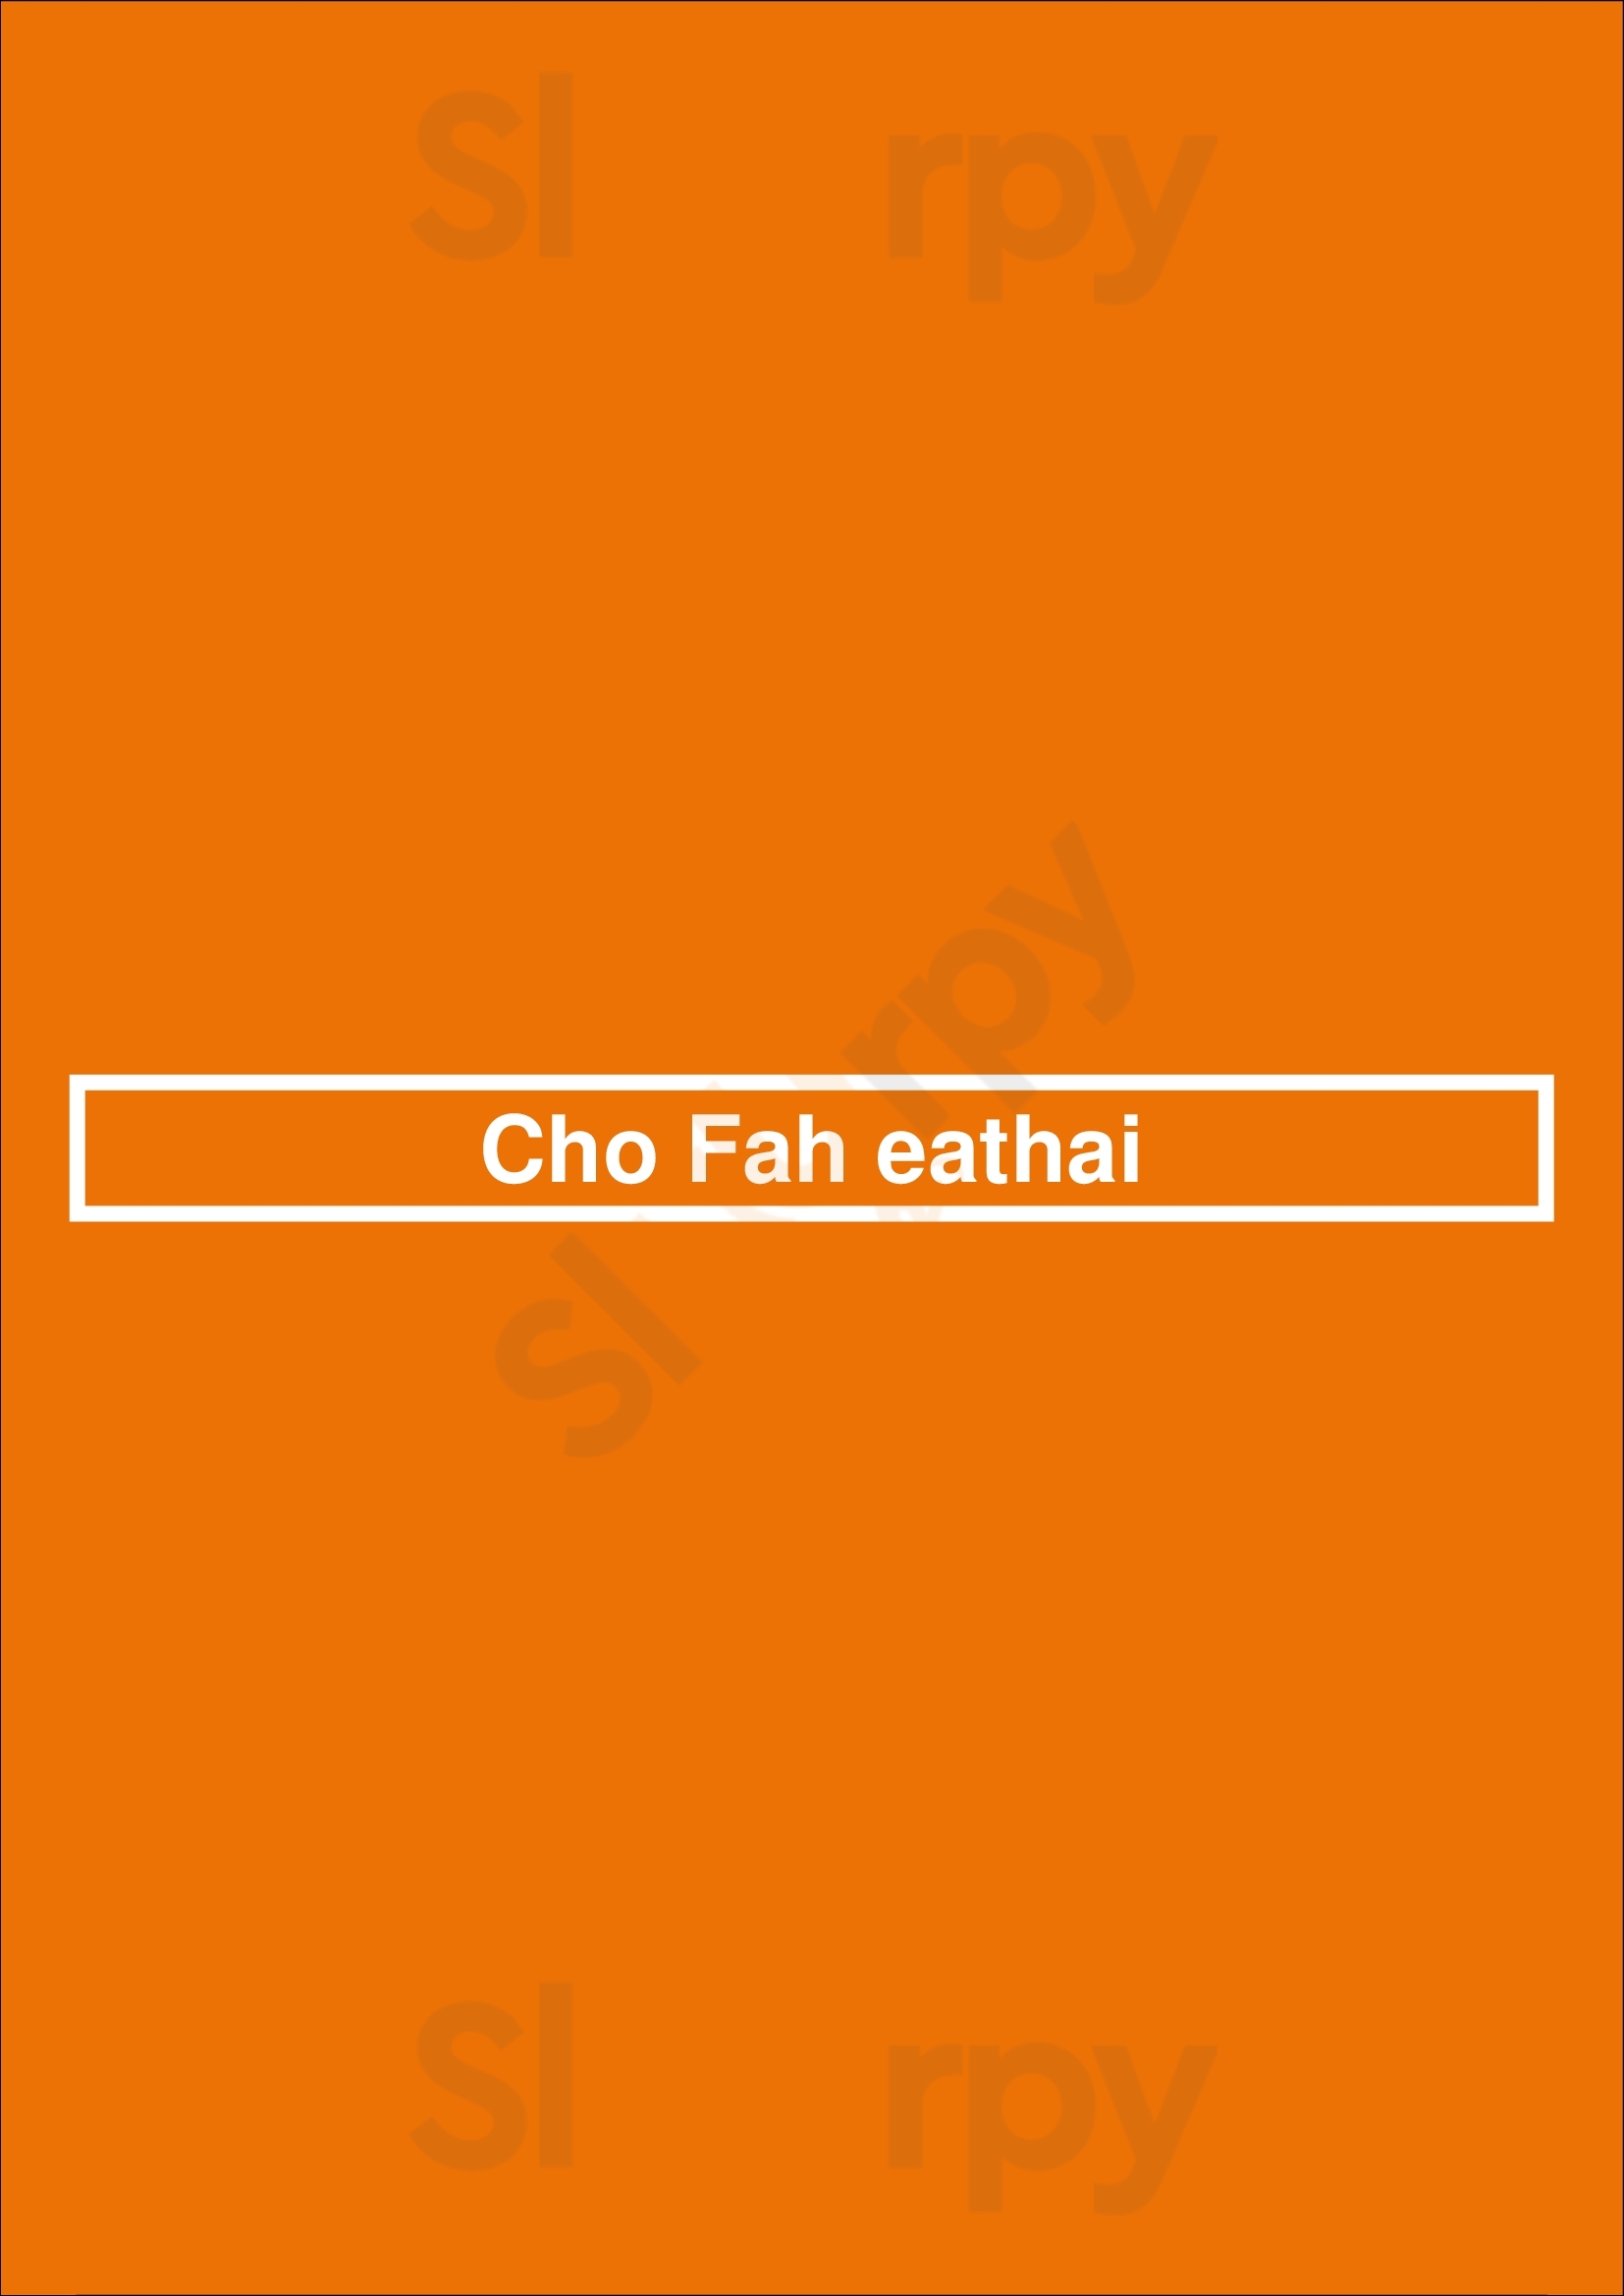 Cho Fah Eathai Groningen Menu - 1